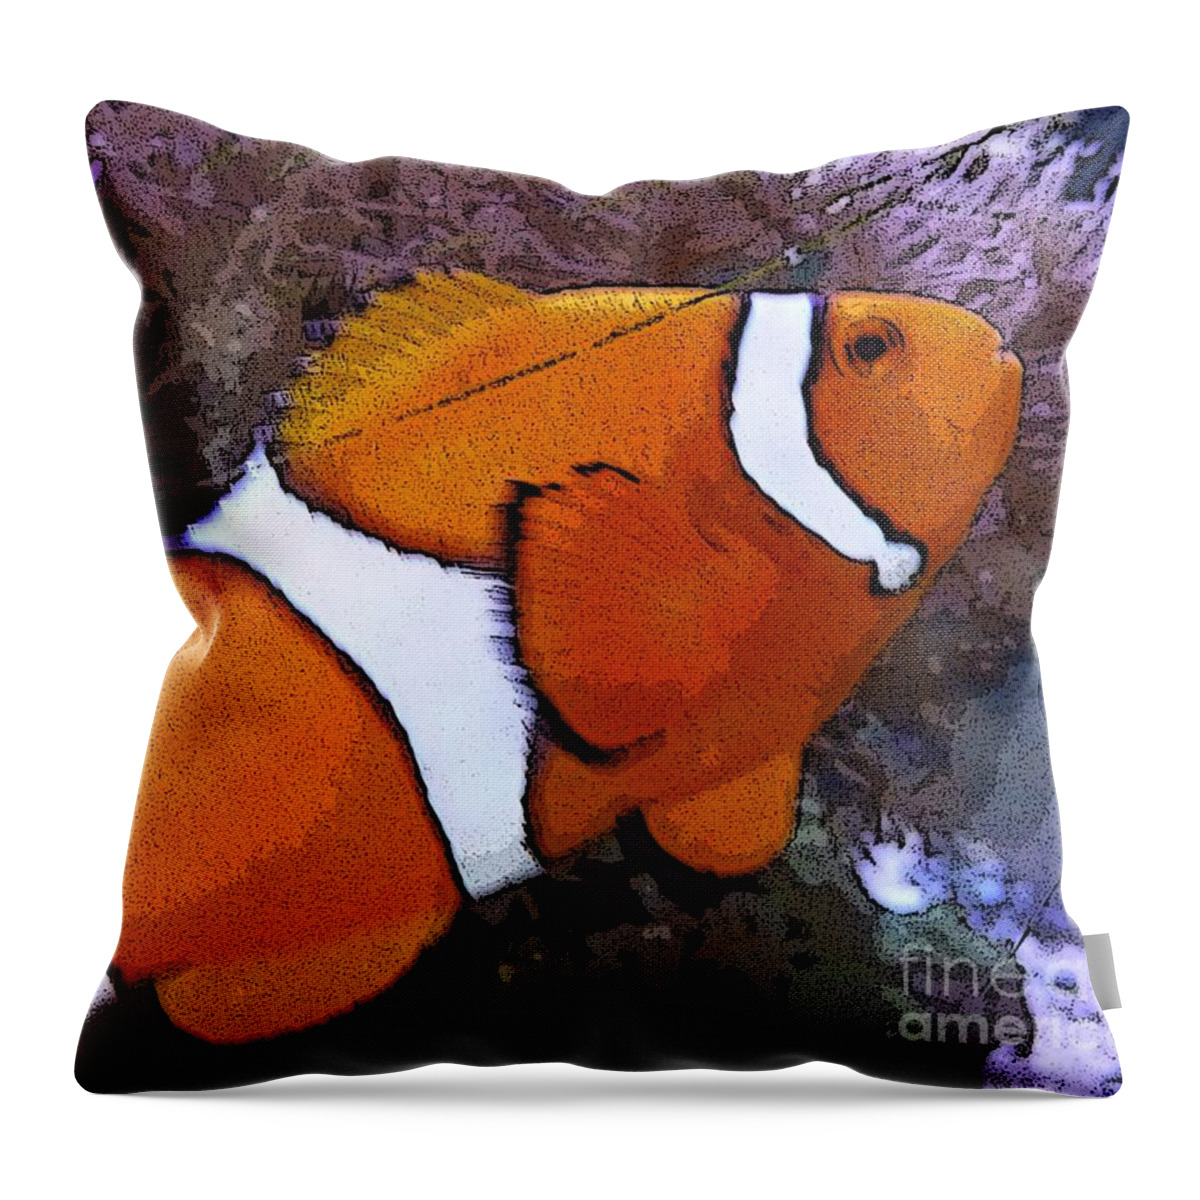 Nemo Throw Pillow featuring the photograph Nemo's Home by Barbie Corbett-Newmin